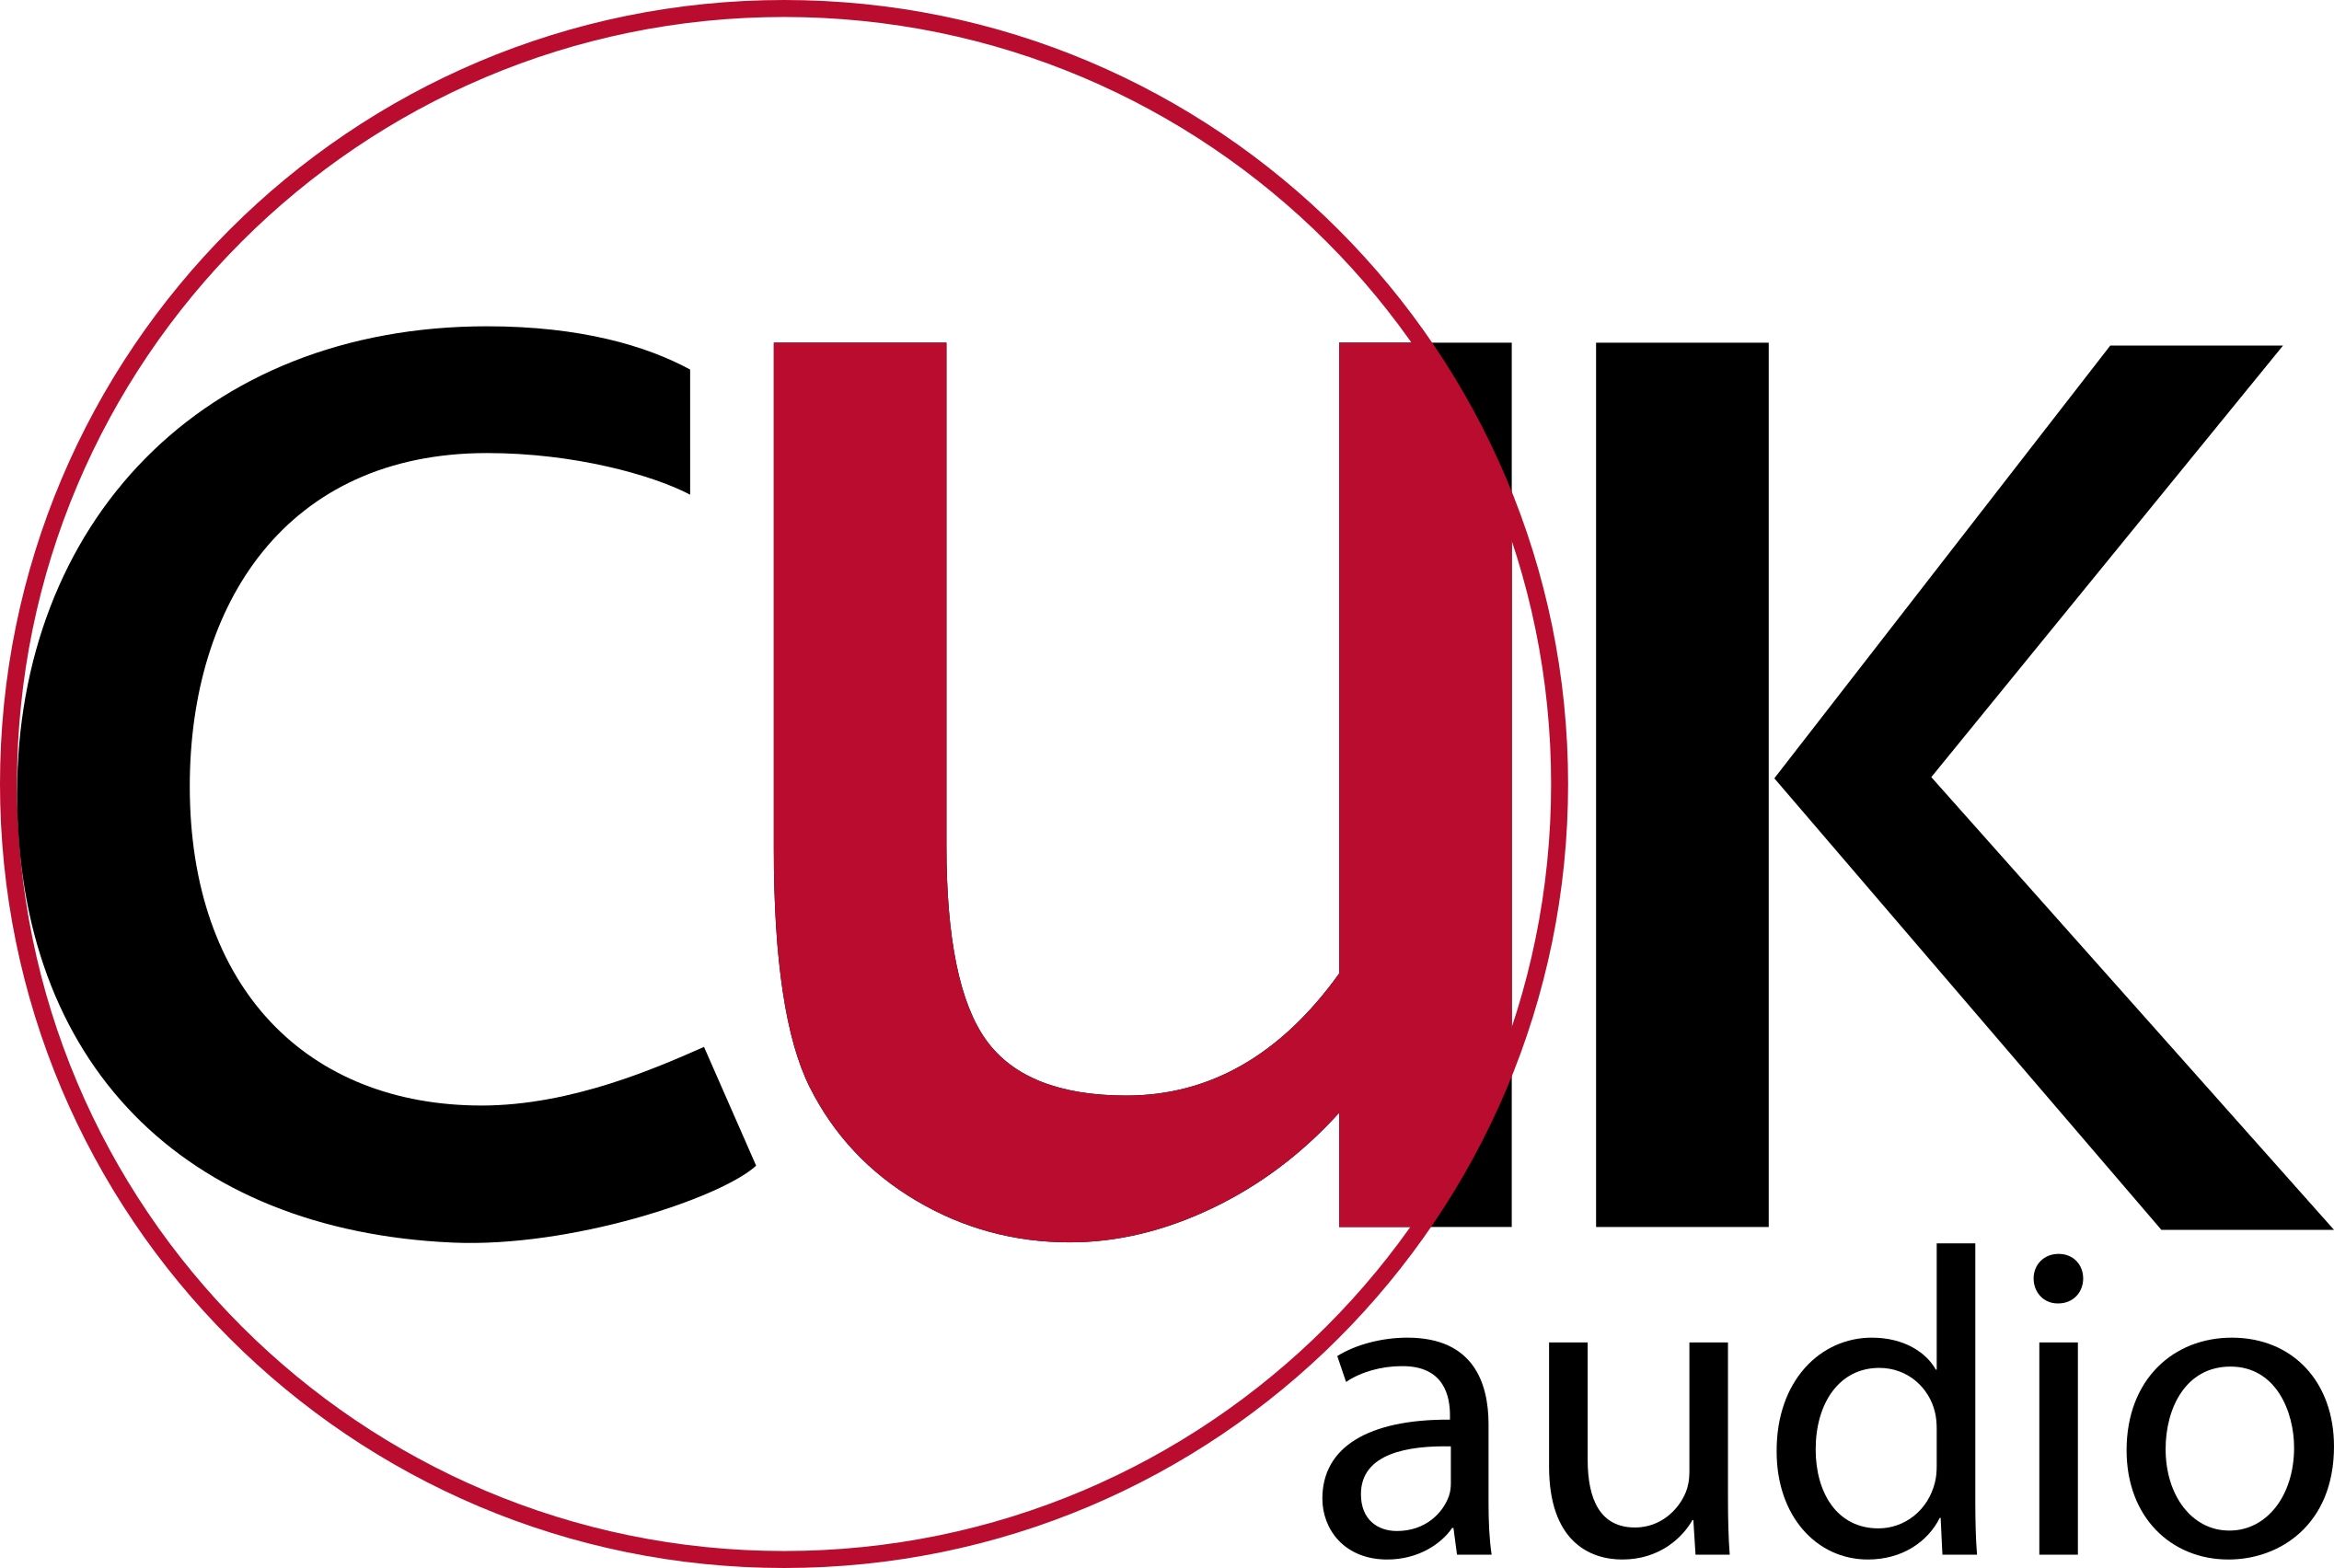 CUK Audio